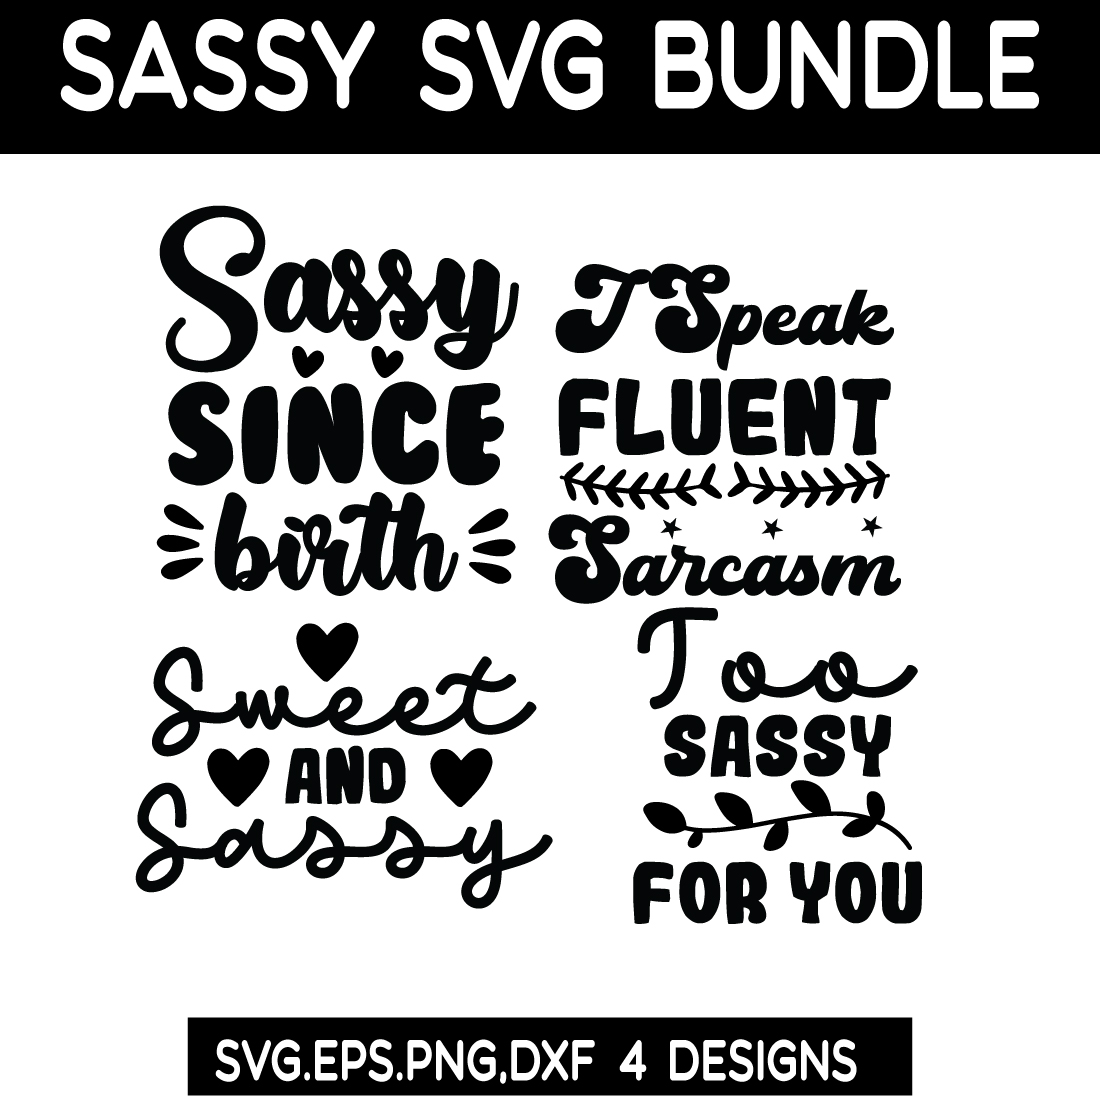 Sassy SVG bundle preview image.